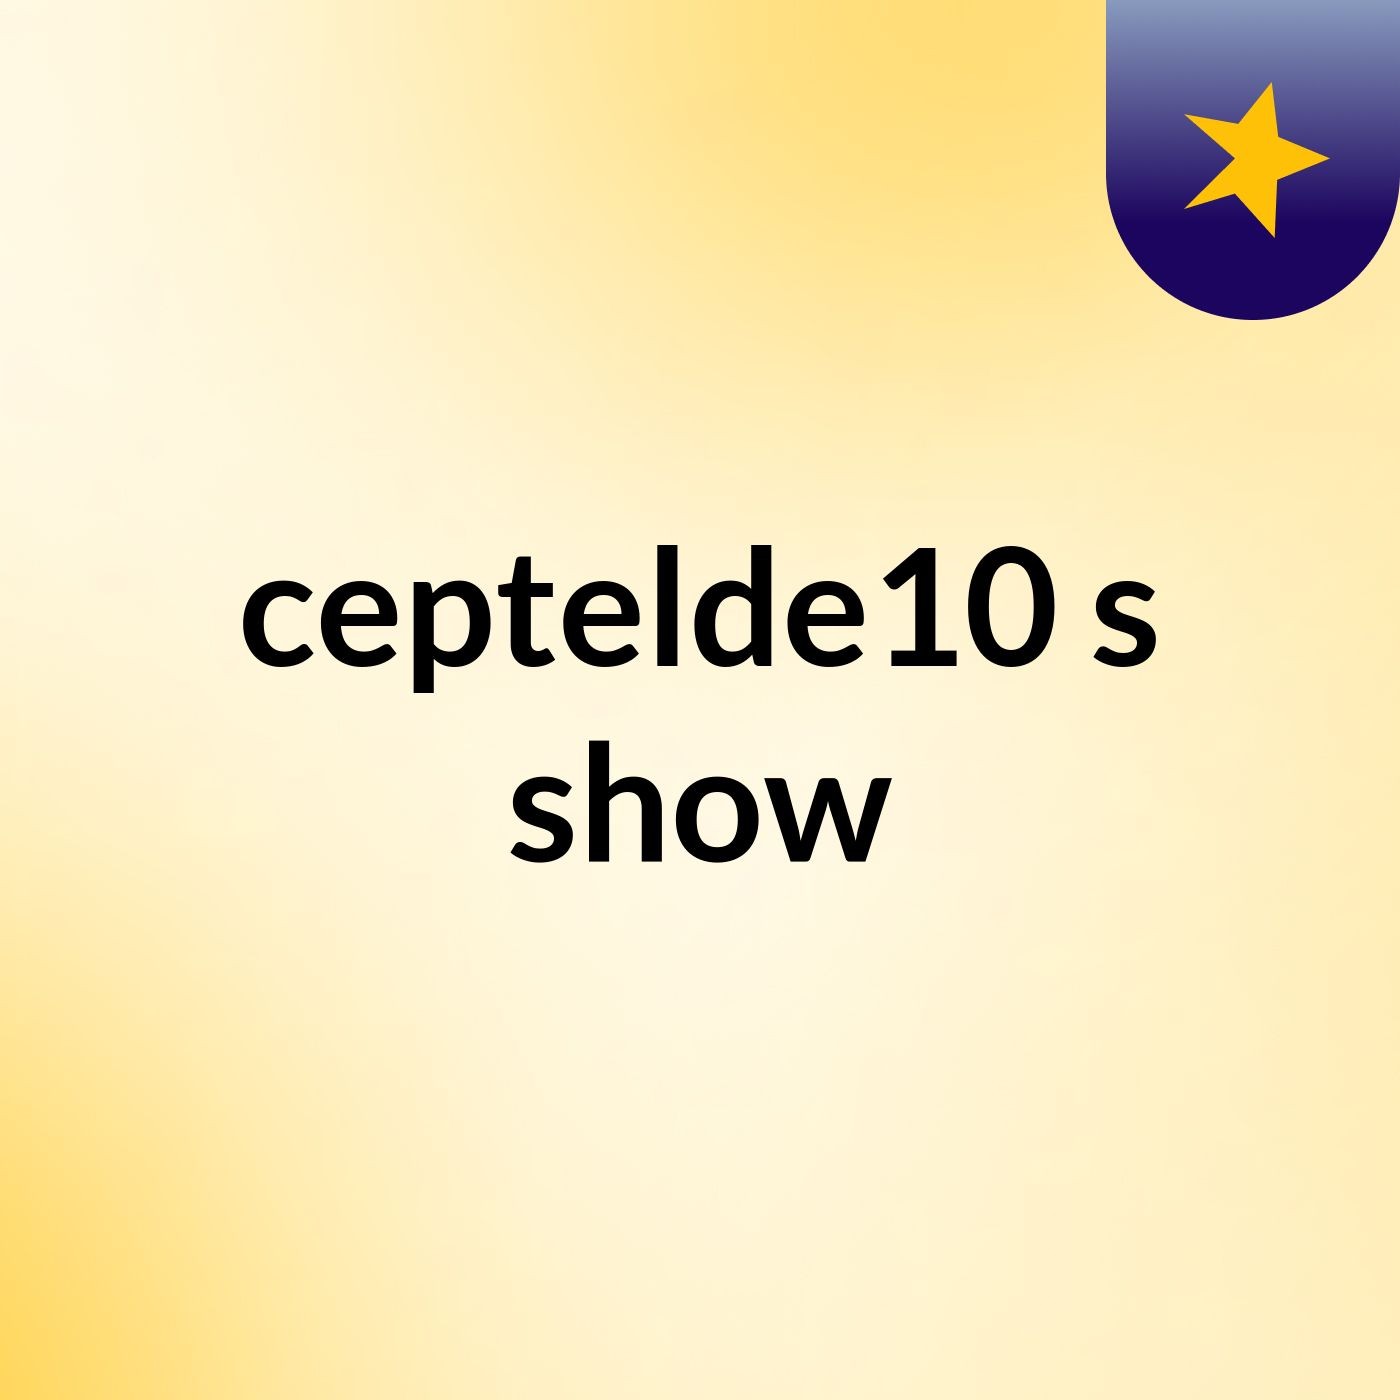 ceptelde10's show